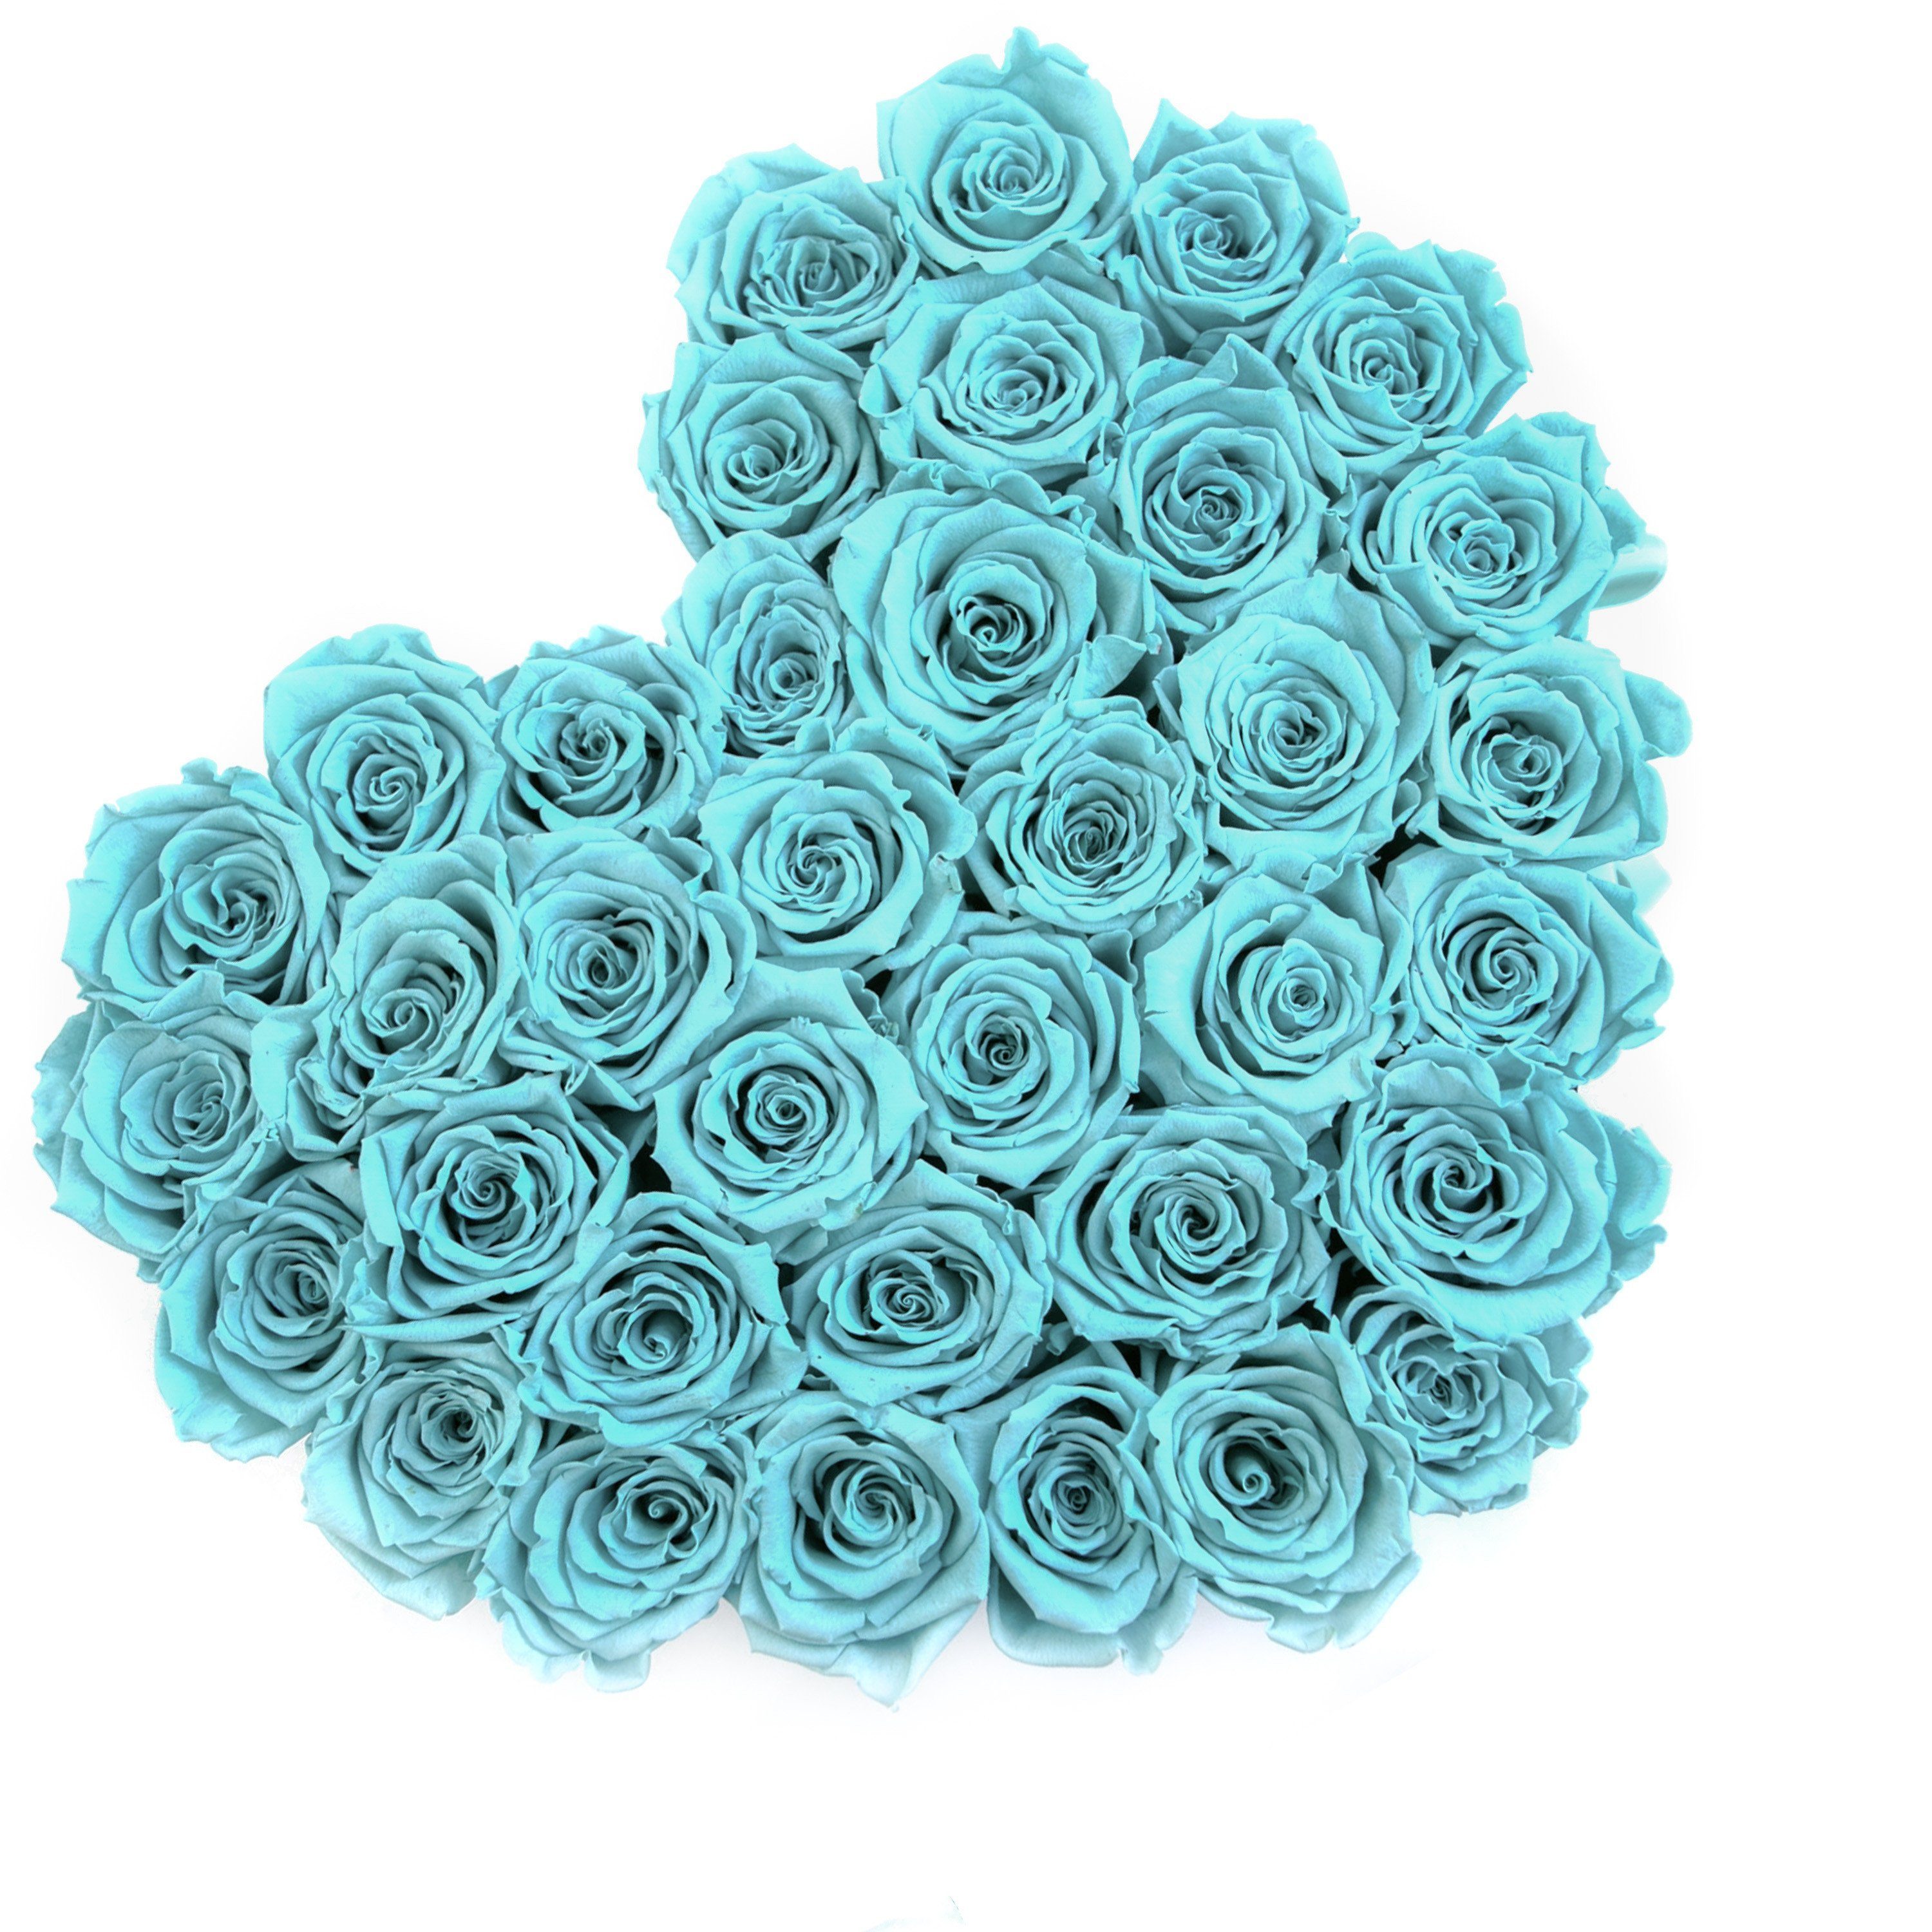 LOVE box - black - tiffany-blue roses tiffany-blue eternity roses - the million roses